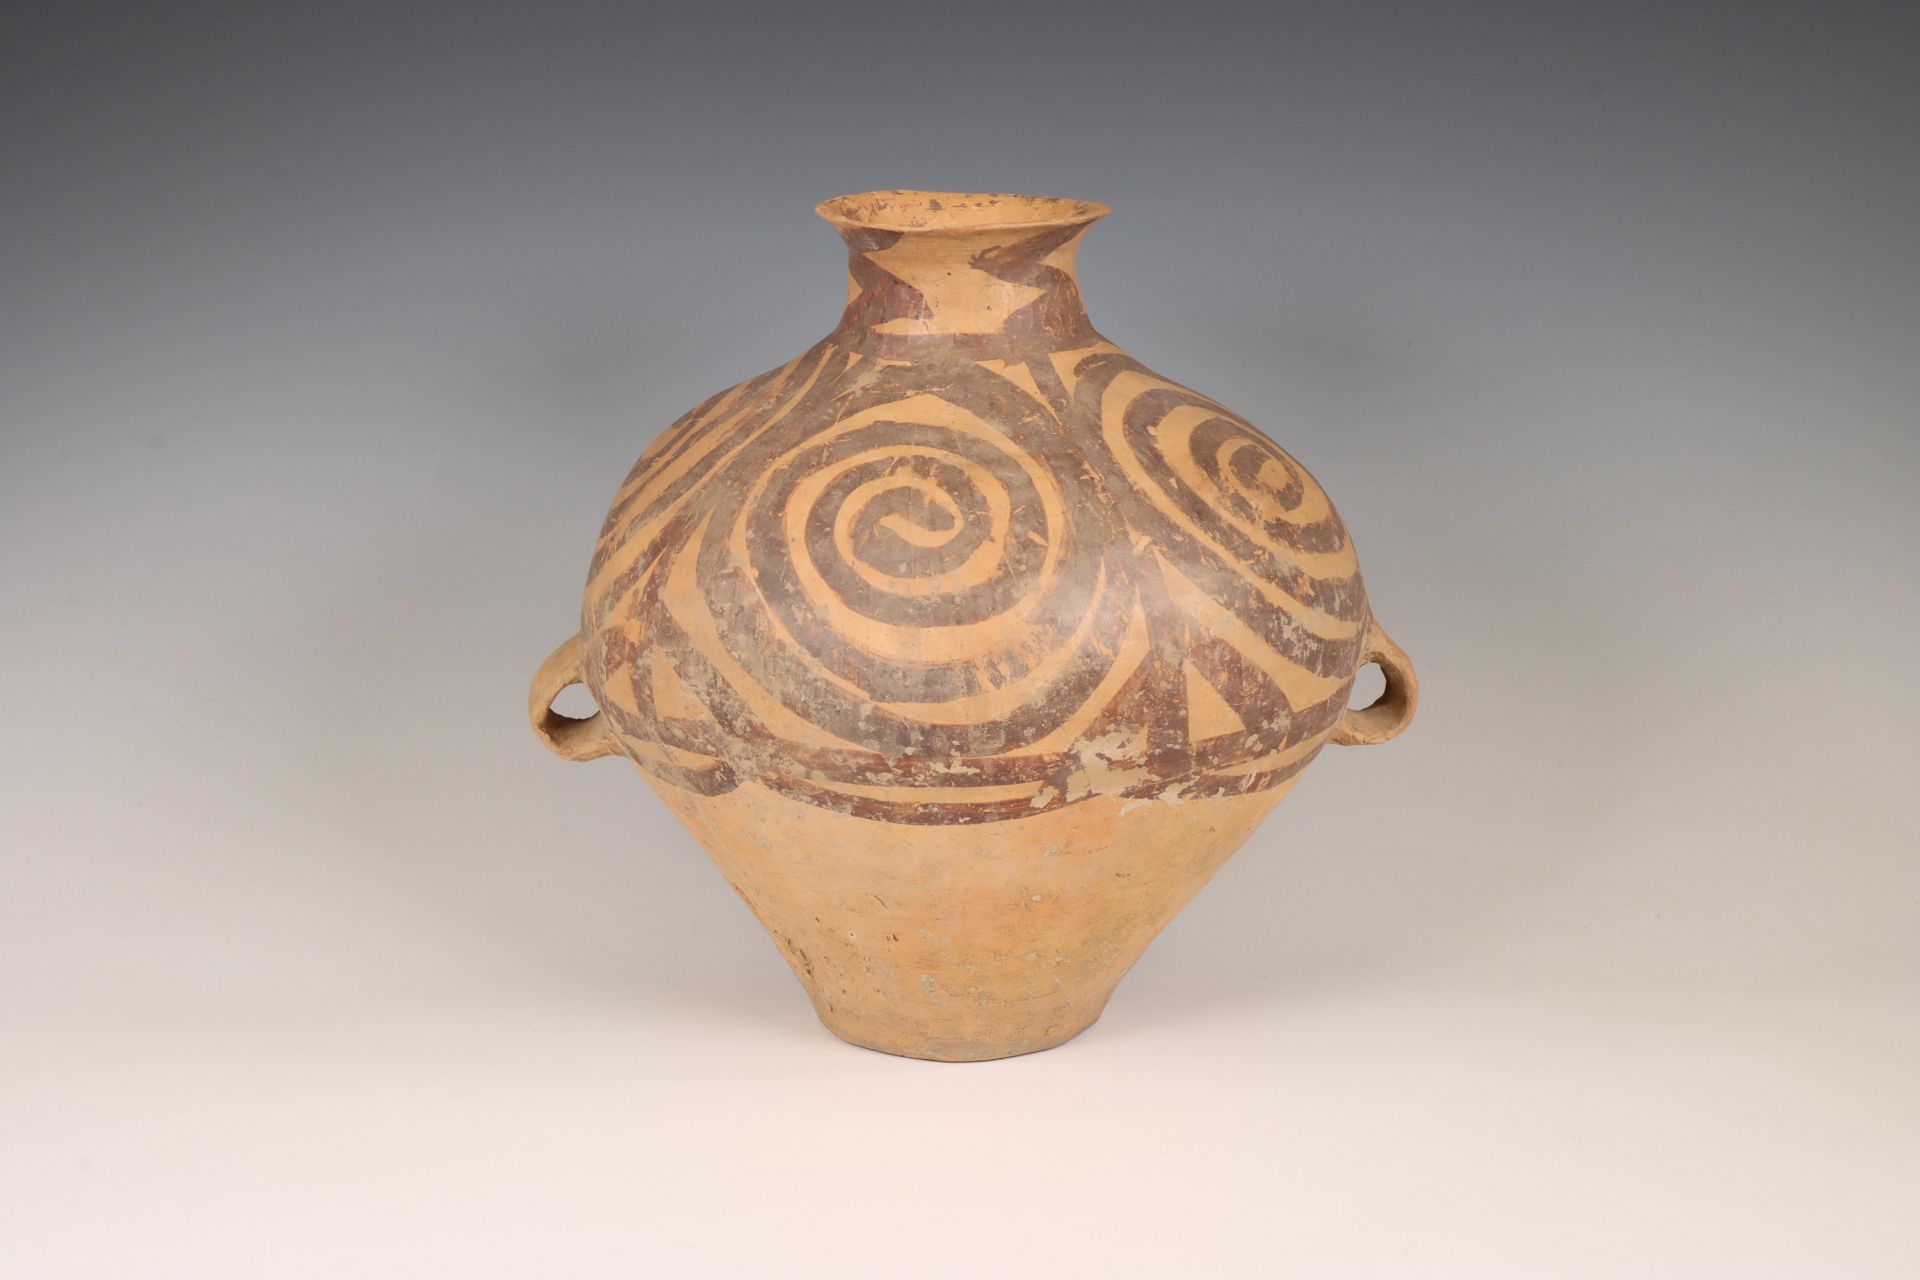 China, earthenware pot, Majiayao culture, Machang phase, late 3rd millennium BC,